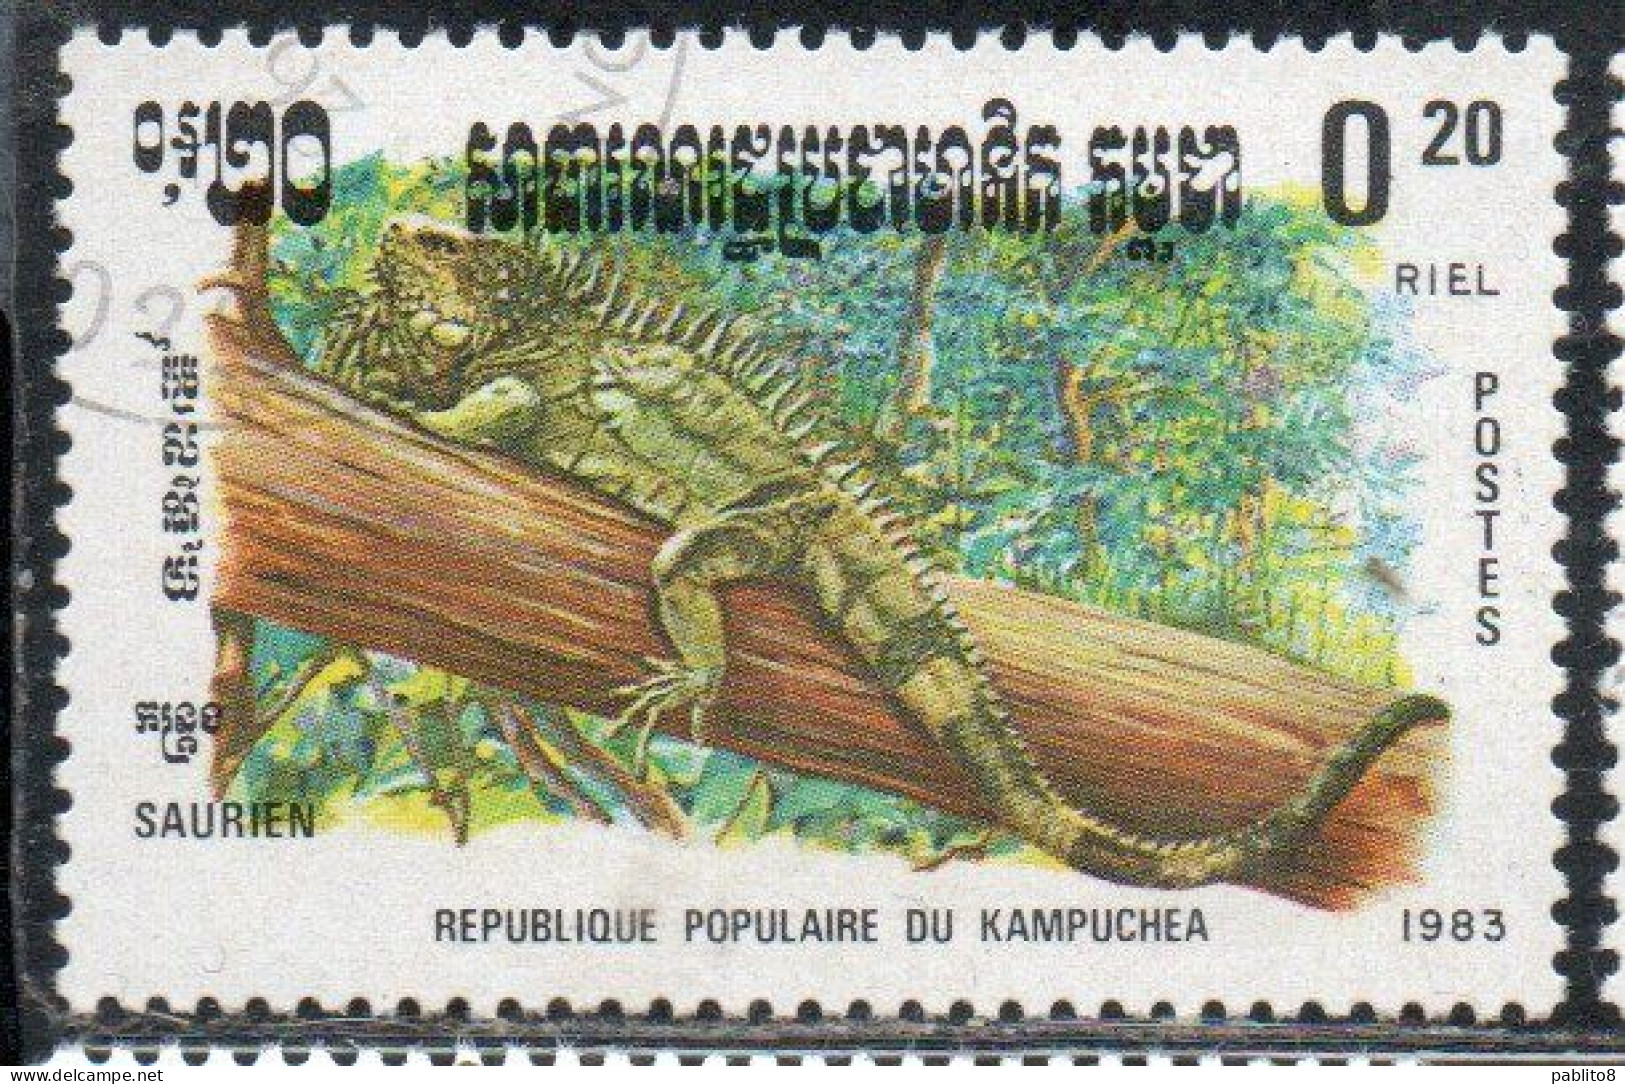 CAMBODIA KAMPUCHEA CAMBOGIA 1983 REPTILES IGUANA 20c USED USATO OBLITERE' - Kampuchea